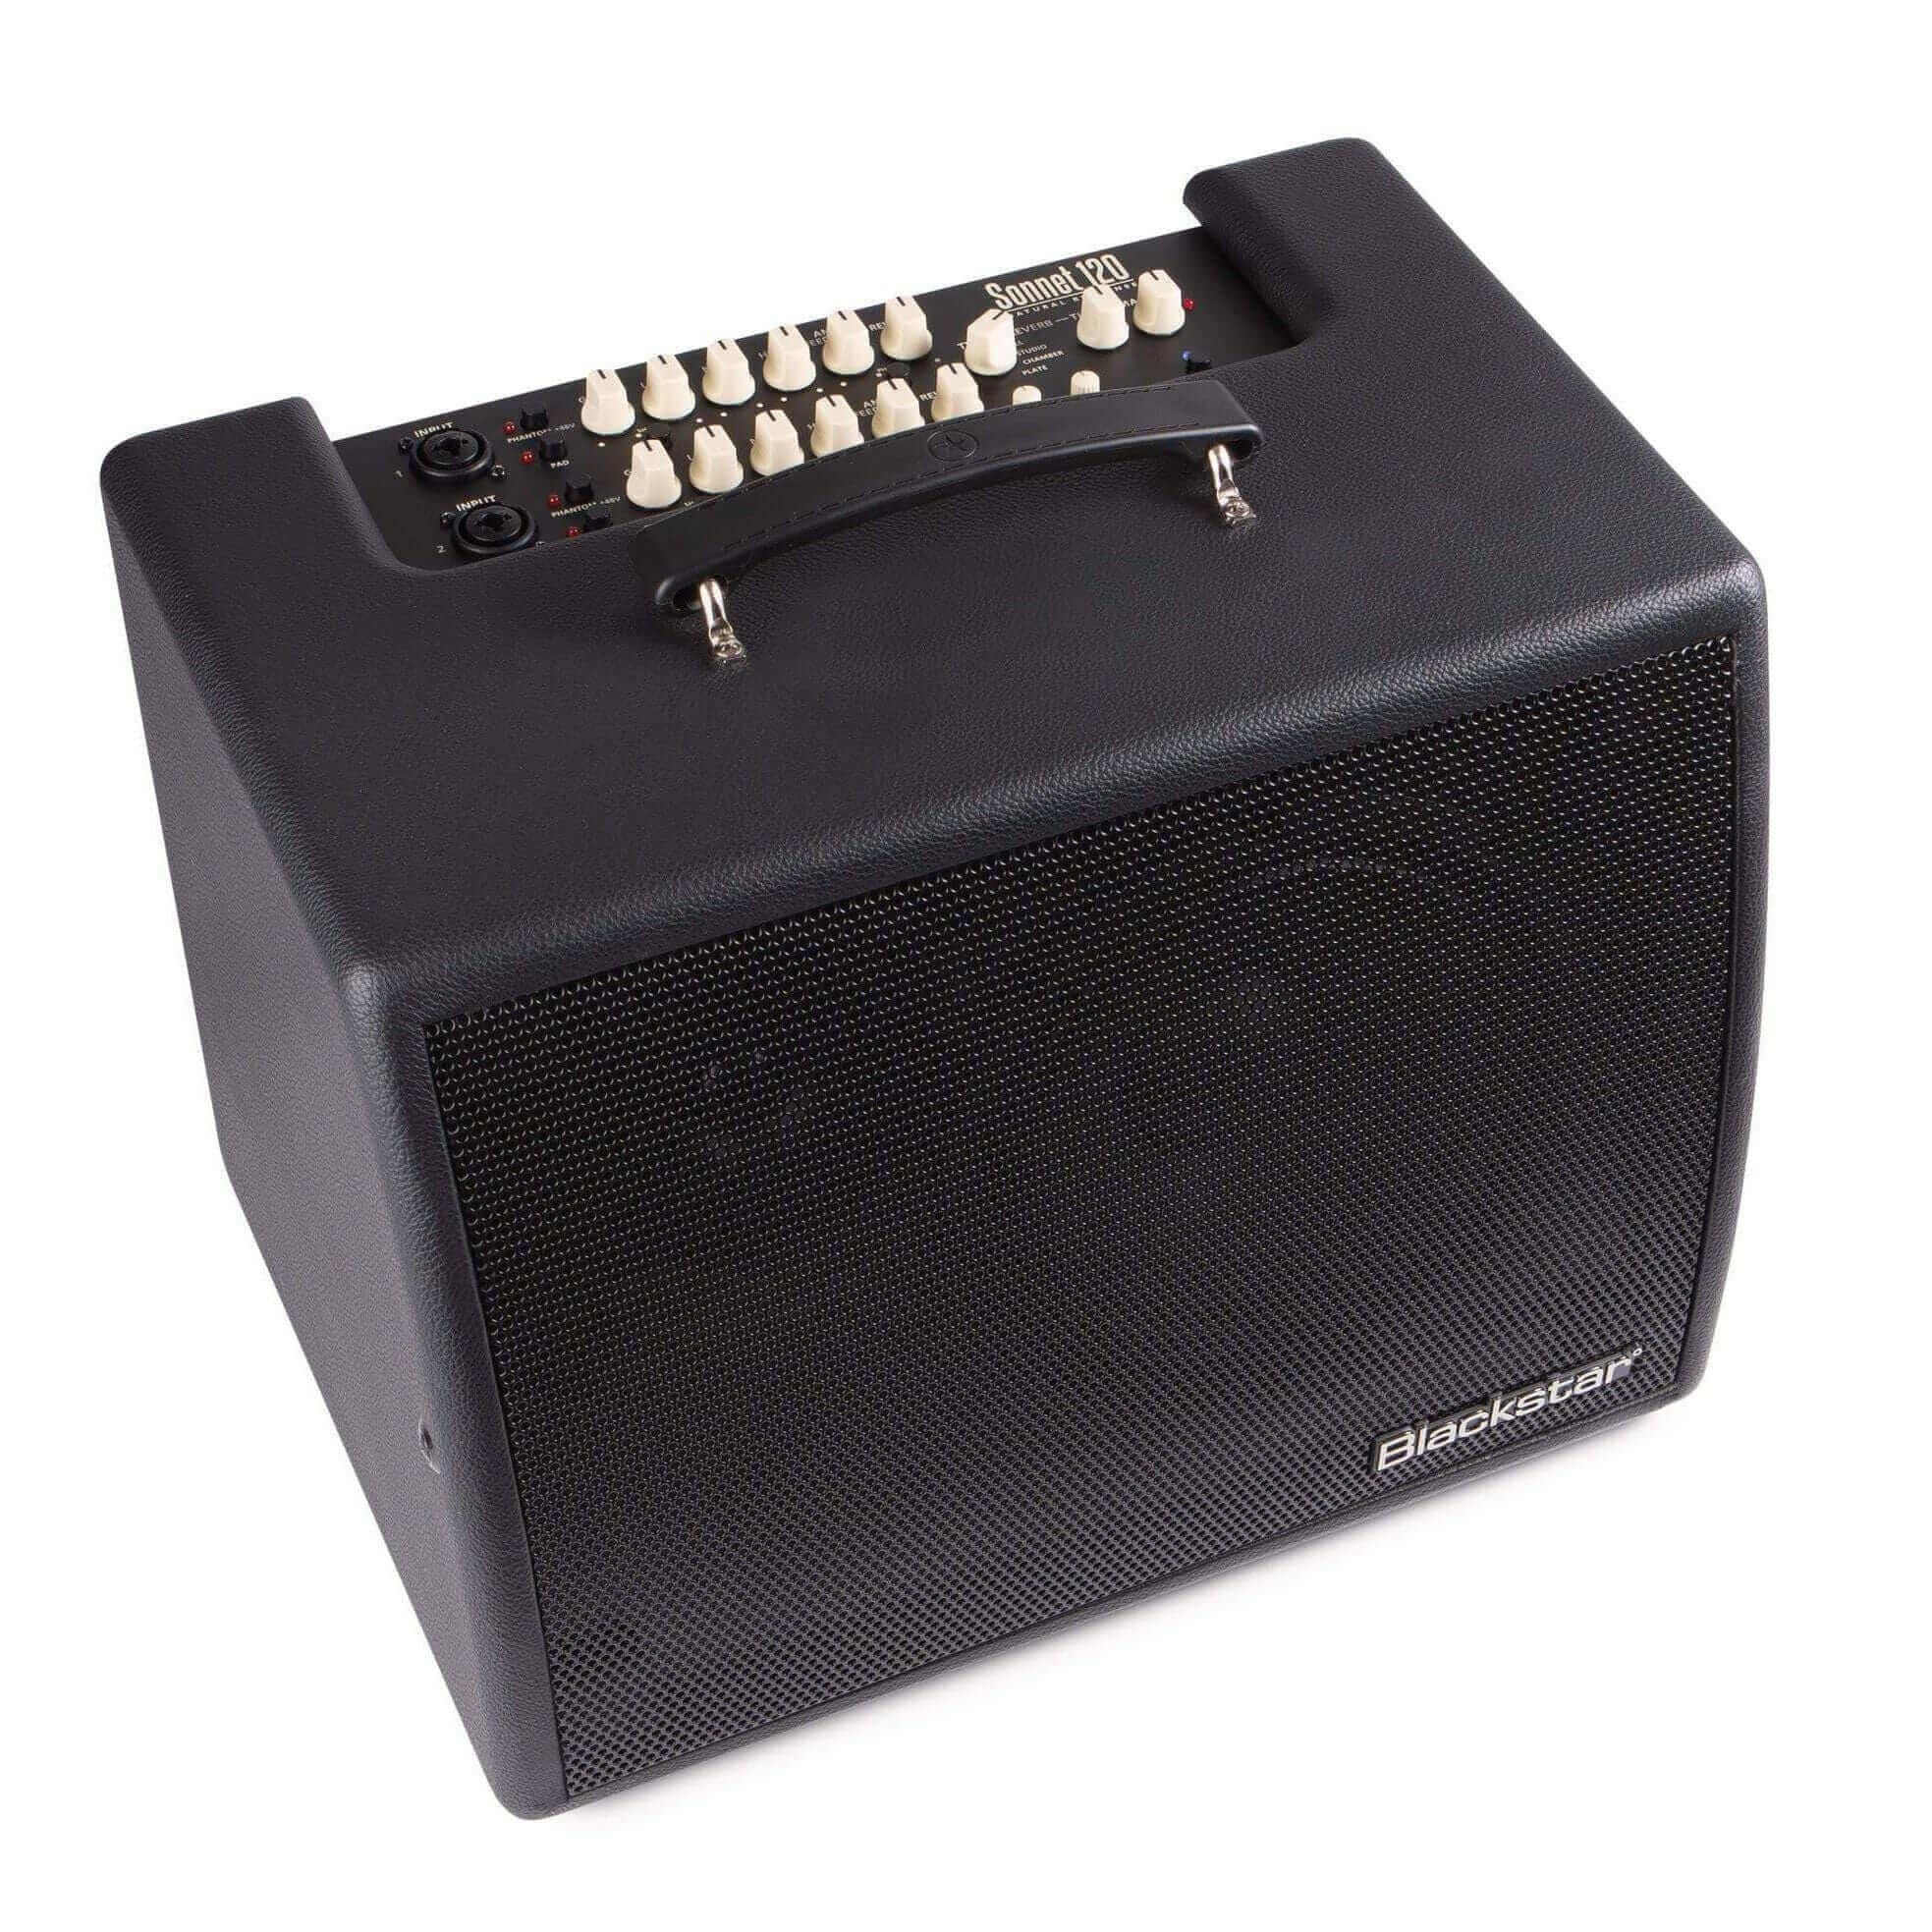 Blackstar Amplifier Blackstar Sonnet 120 Acoustic Combo